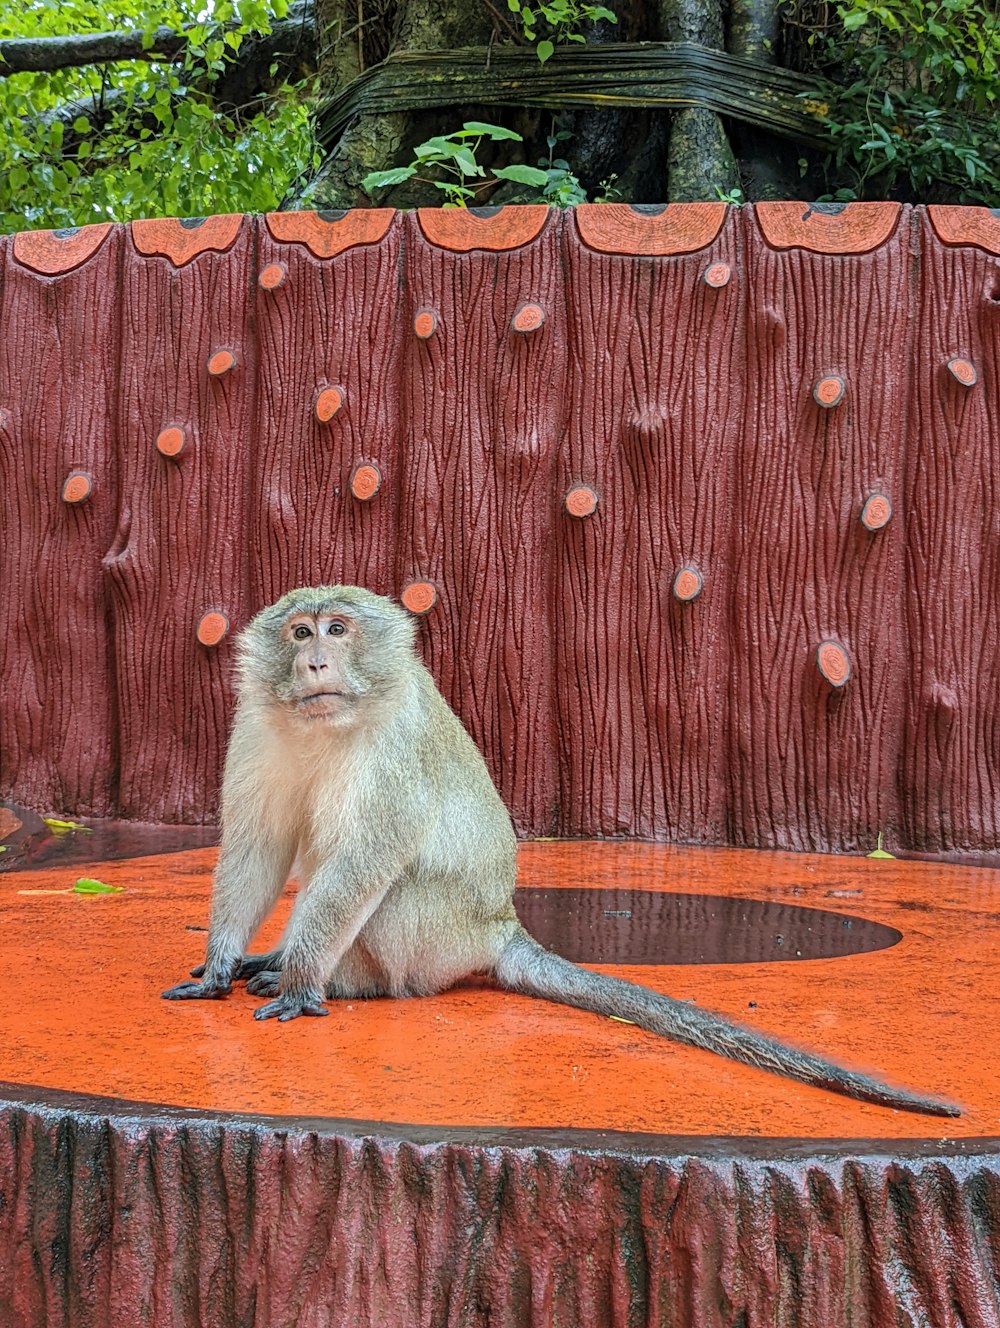 a monkey sitting on top of an orange platform